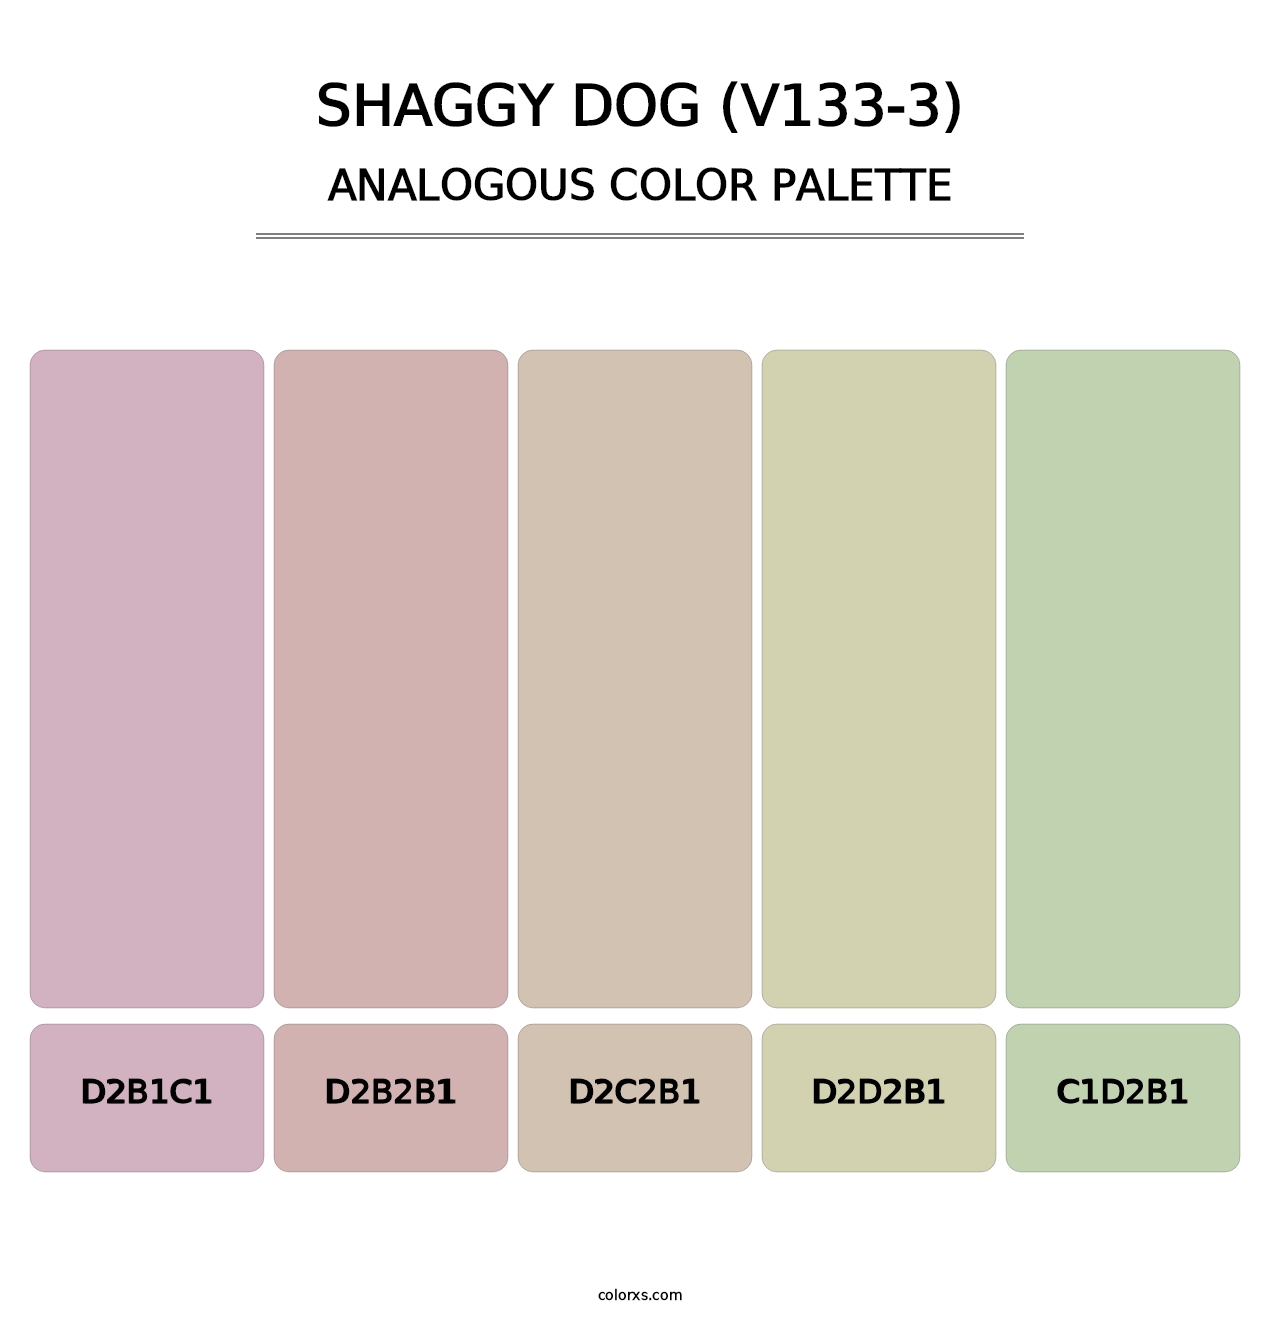 Shaggy Dog (V133-3) - Analogous Color Palette